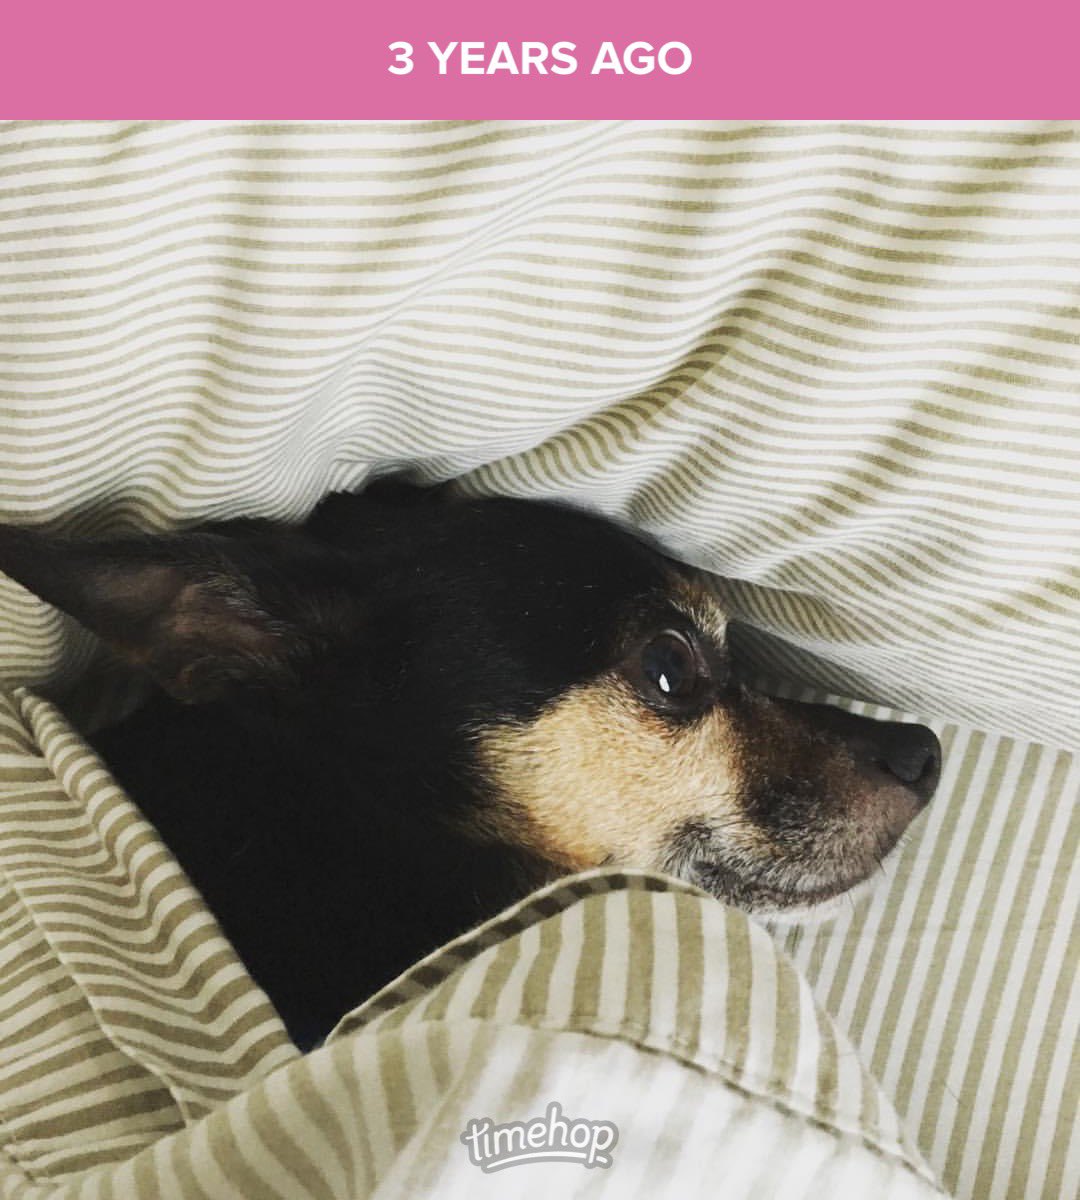 #TBT 3 years ago: Buddy just relaxing! ❤️🐶🥱

#Buddy #Love #AdoptDontShop #dogsoftwitter #RatTerrierChihuahua #RatTerrier #Chihuahua #Dogs #DogsAreFamily #treats #rides #RainbowBridge #RIP #SpiritOfBuddy 🌈